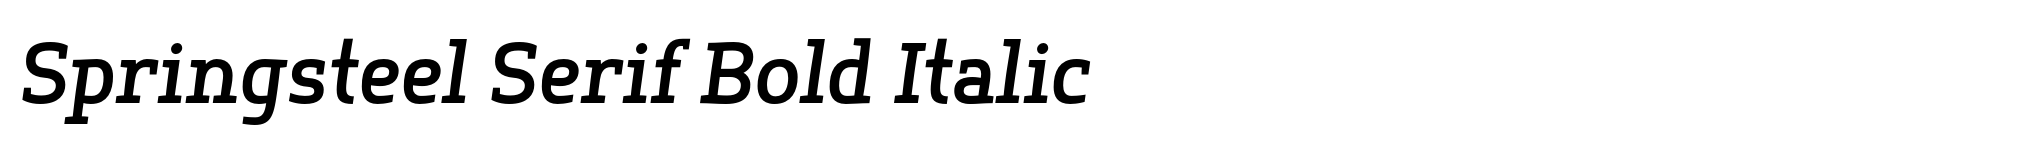 Springsteel Serif Bold Italic image